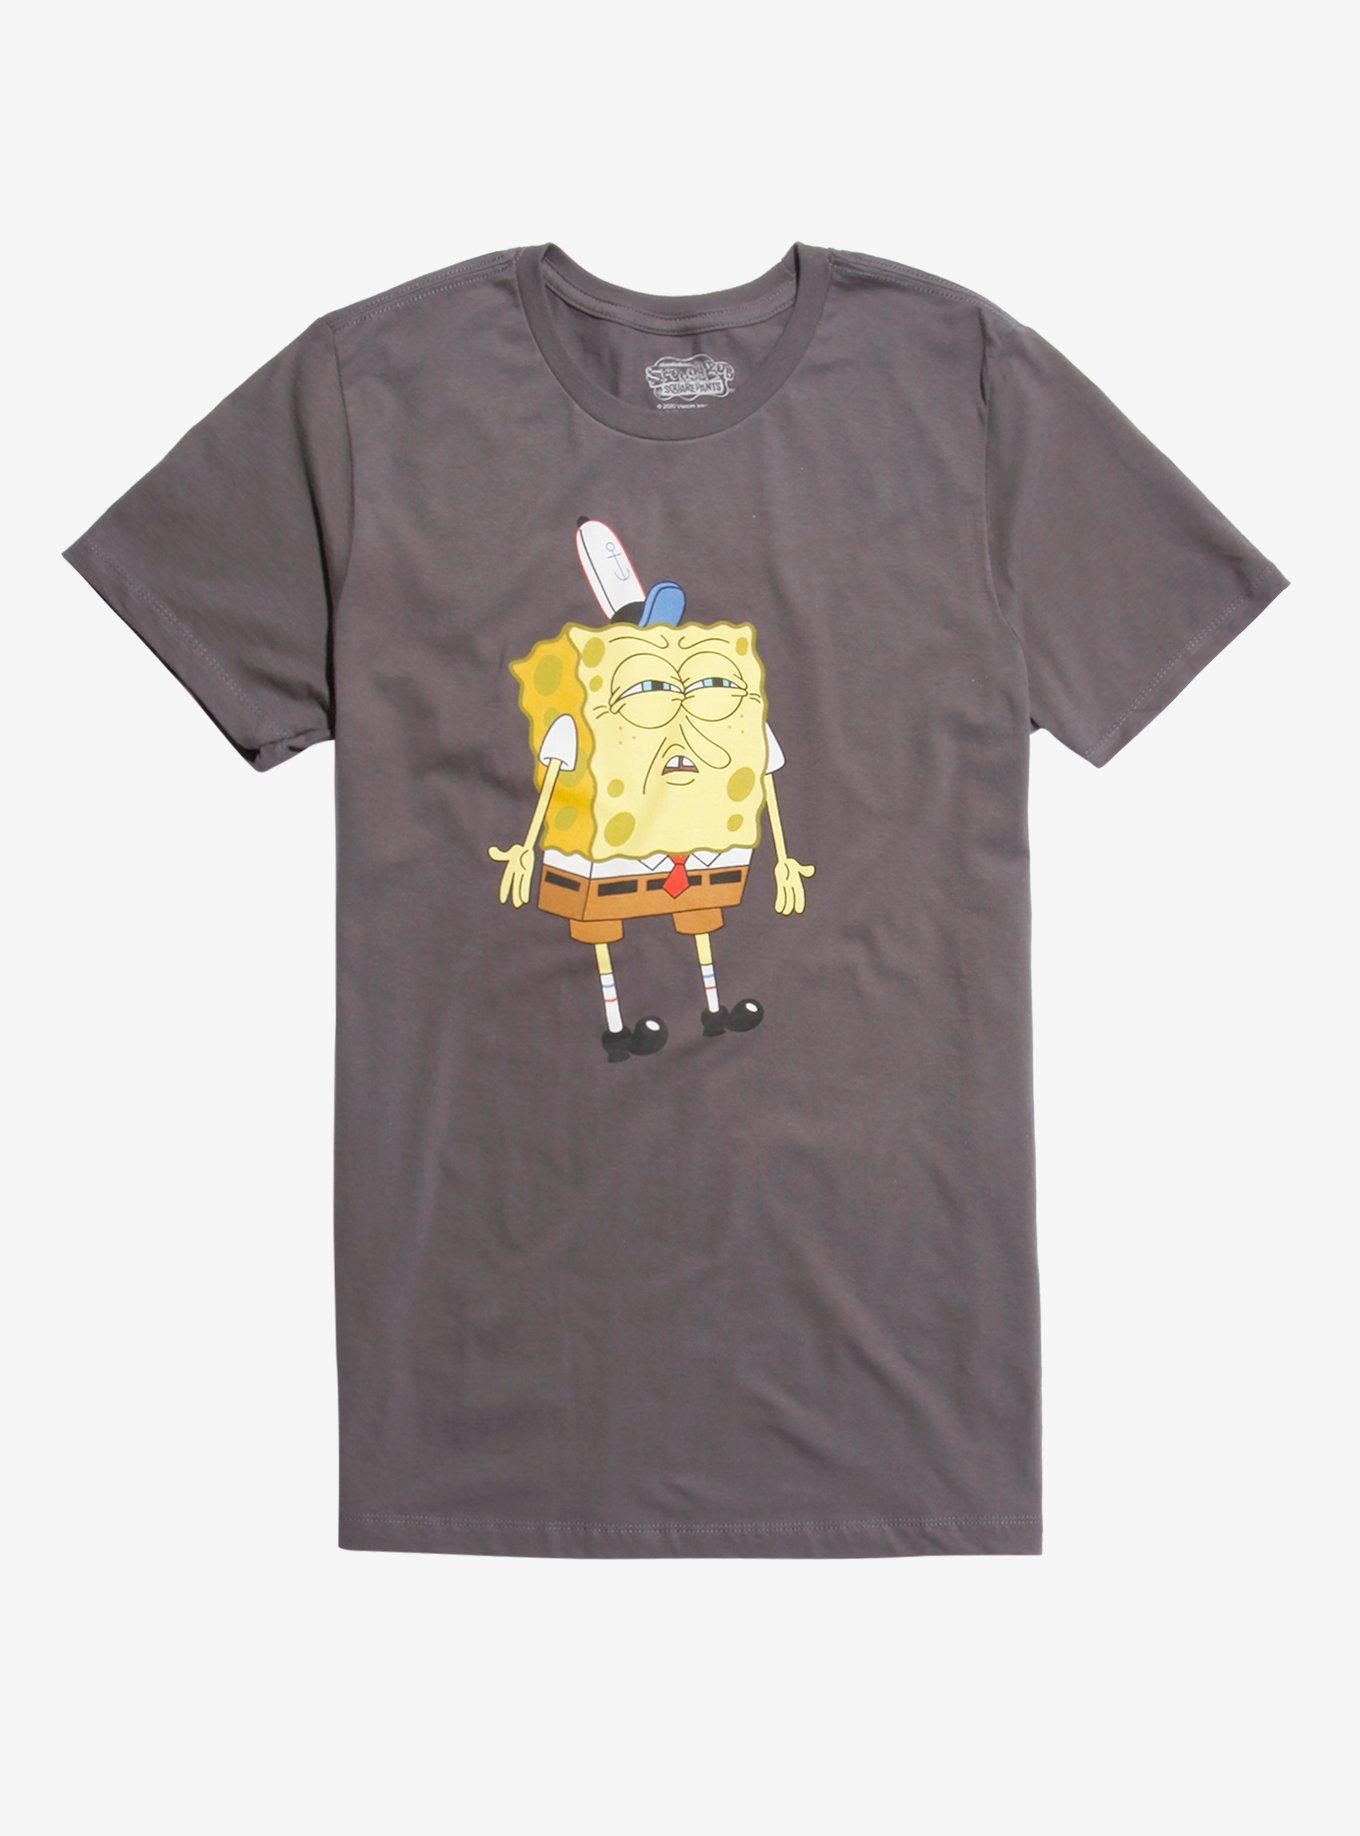 SpongeBob SquarePants Ew Face T-Shirt | Hot Topic